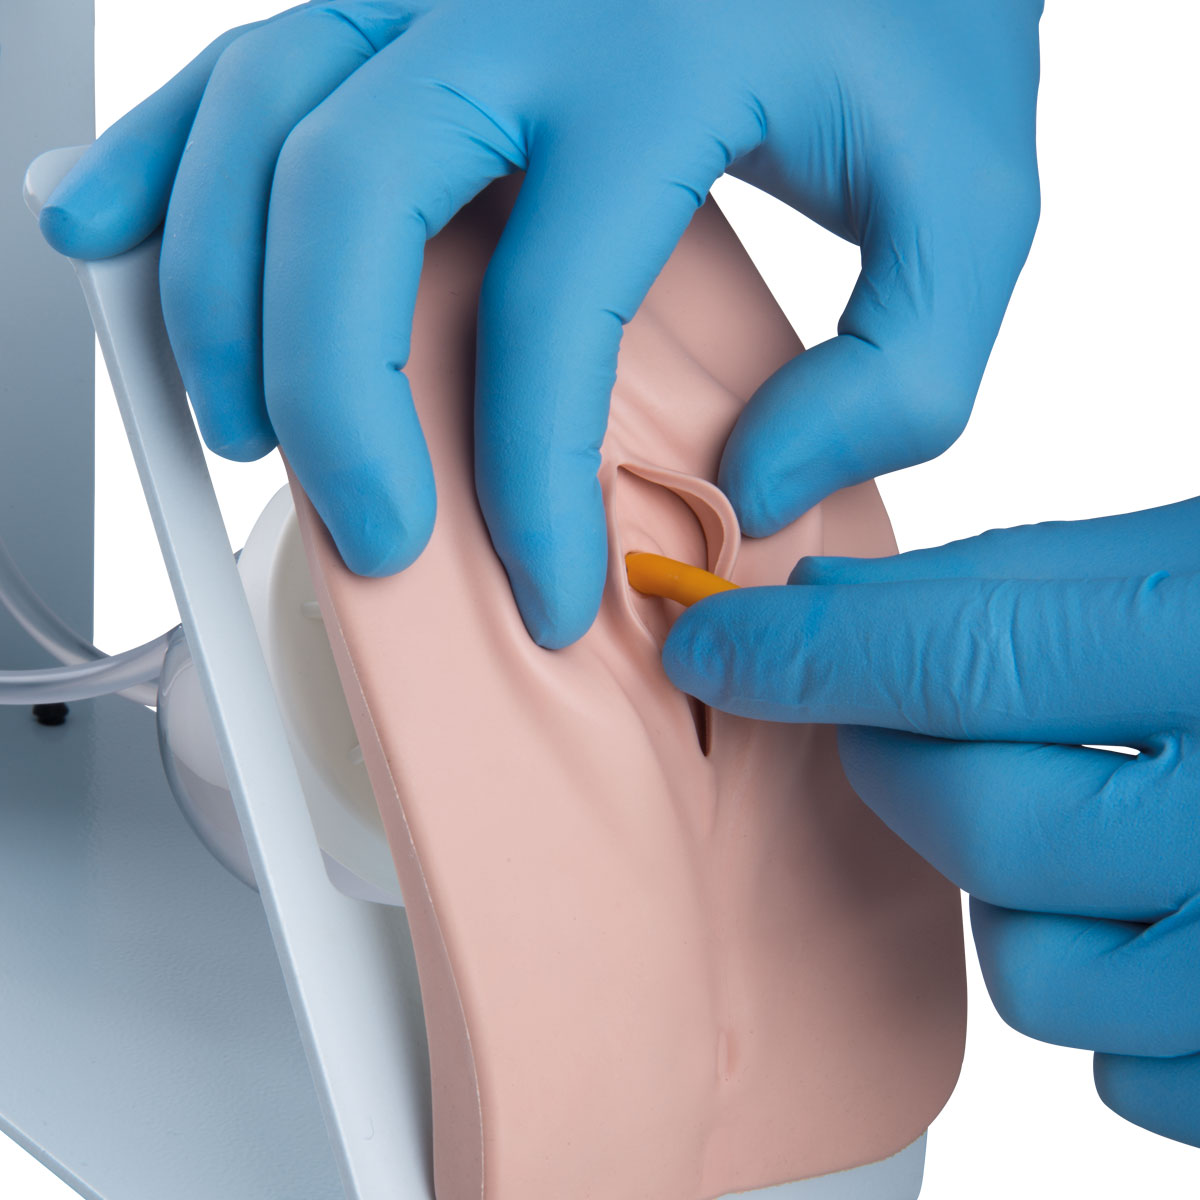 Female Catheter Insertion Procedure